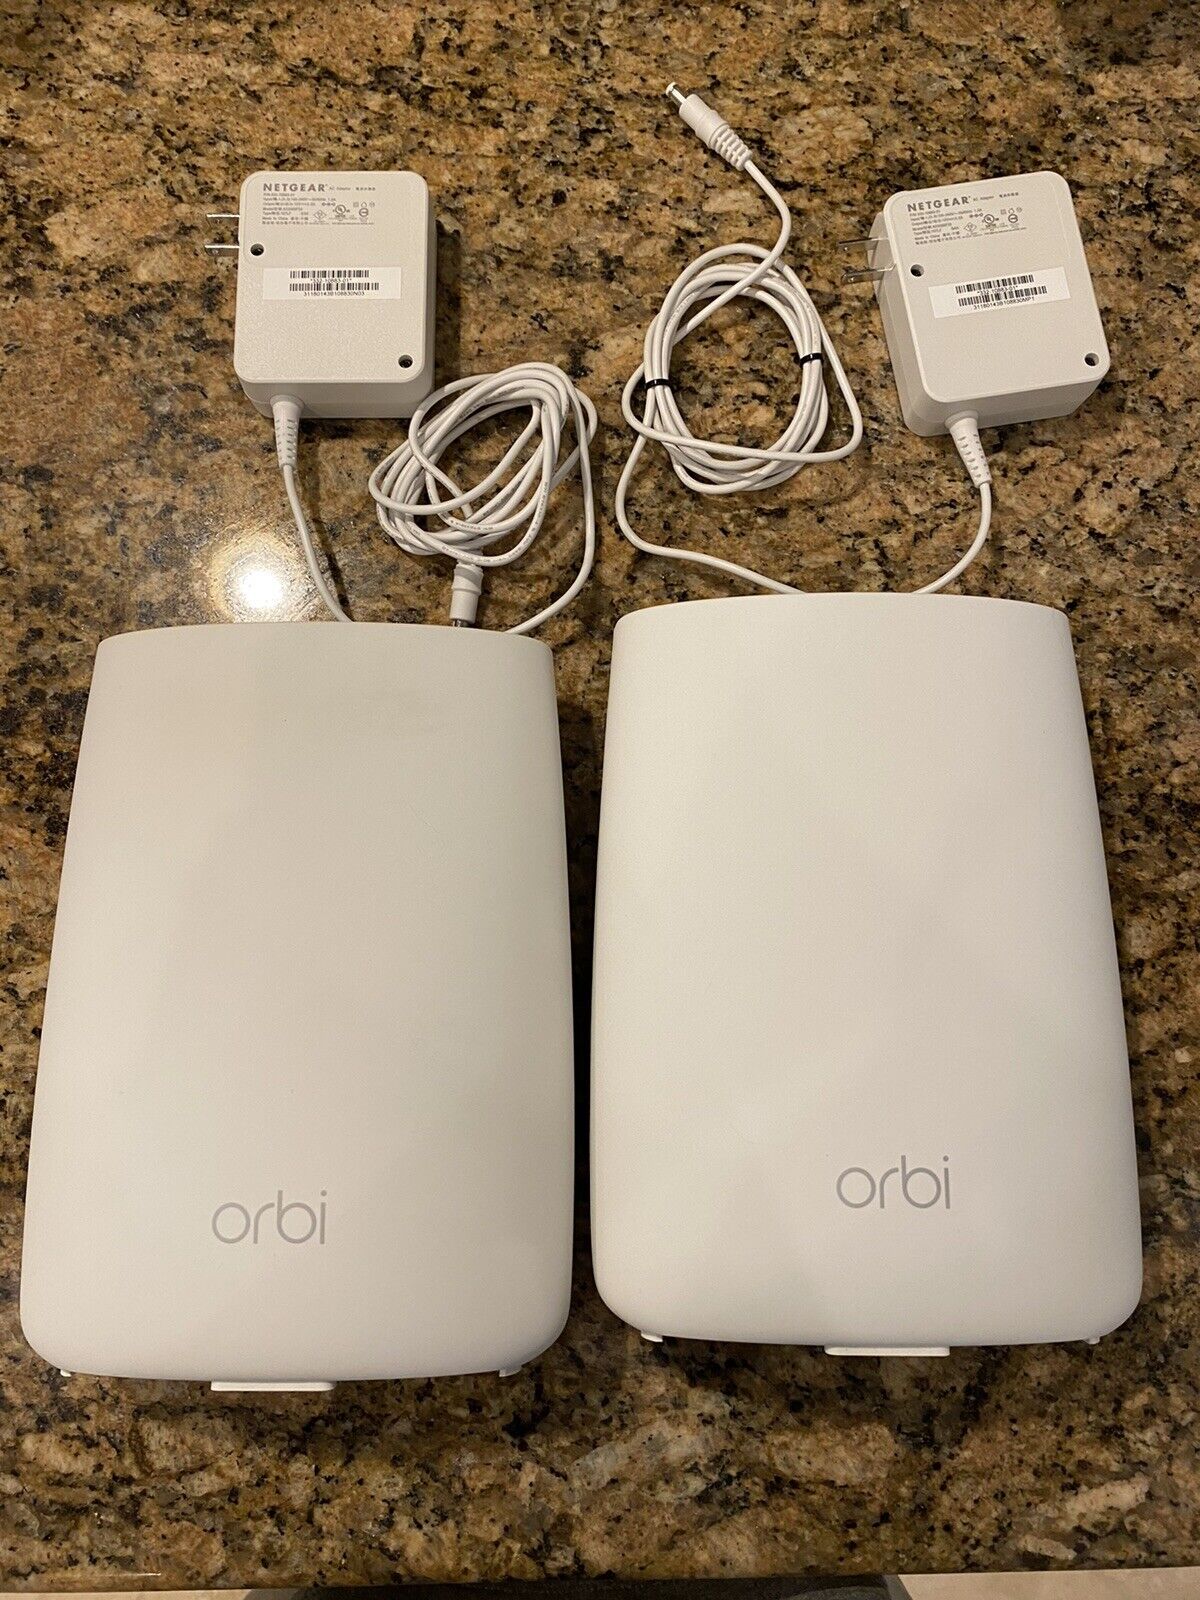 NETGEAR Orbi Tri Band Whole Home Mesh WiFi Router (RBR50) & 1 Satellite (RBS50)